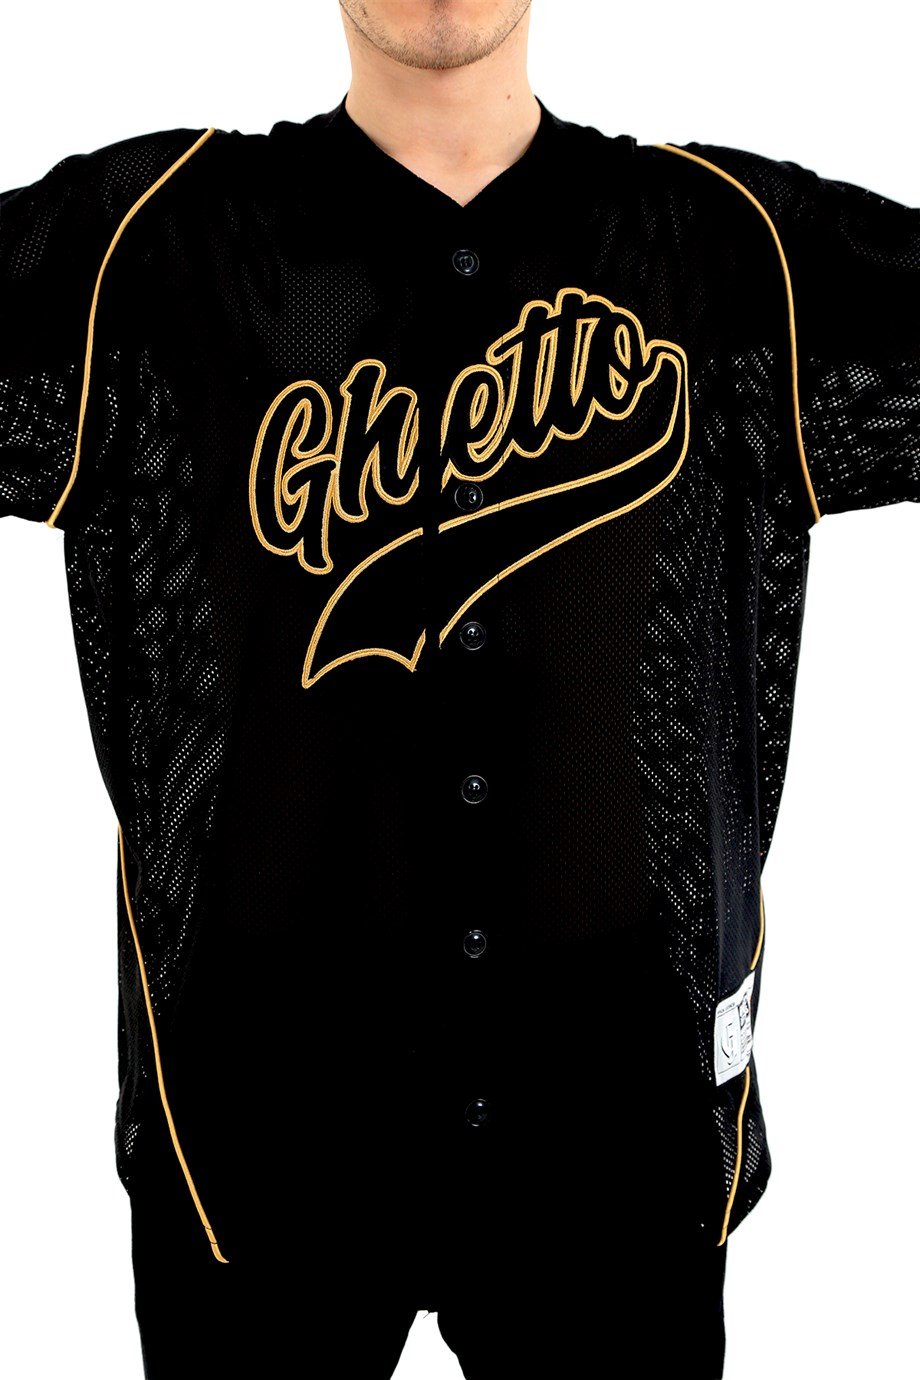 Ghetto Off Limits - Originals Black Baseball Jersey